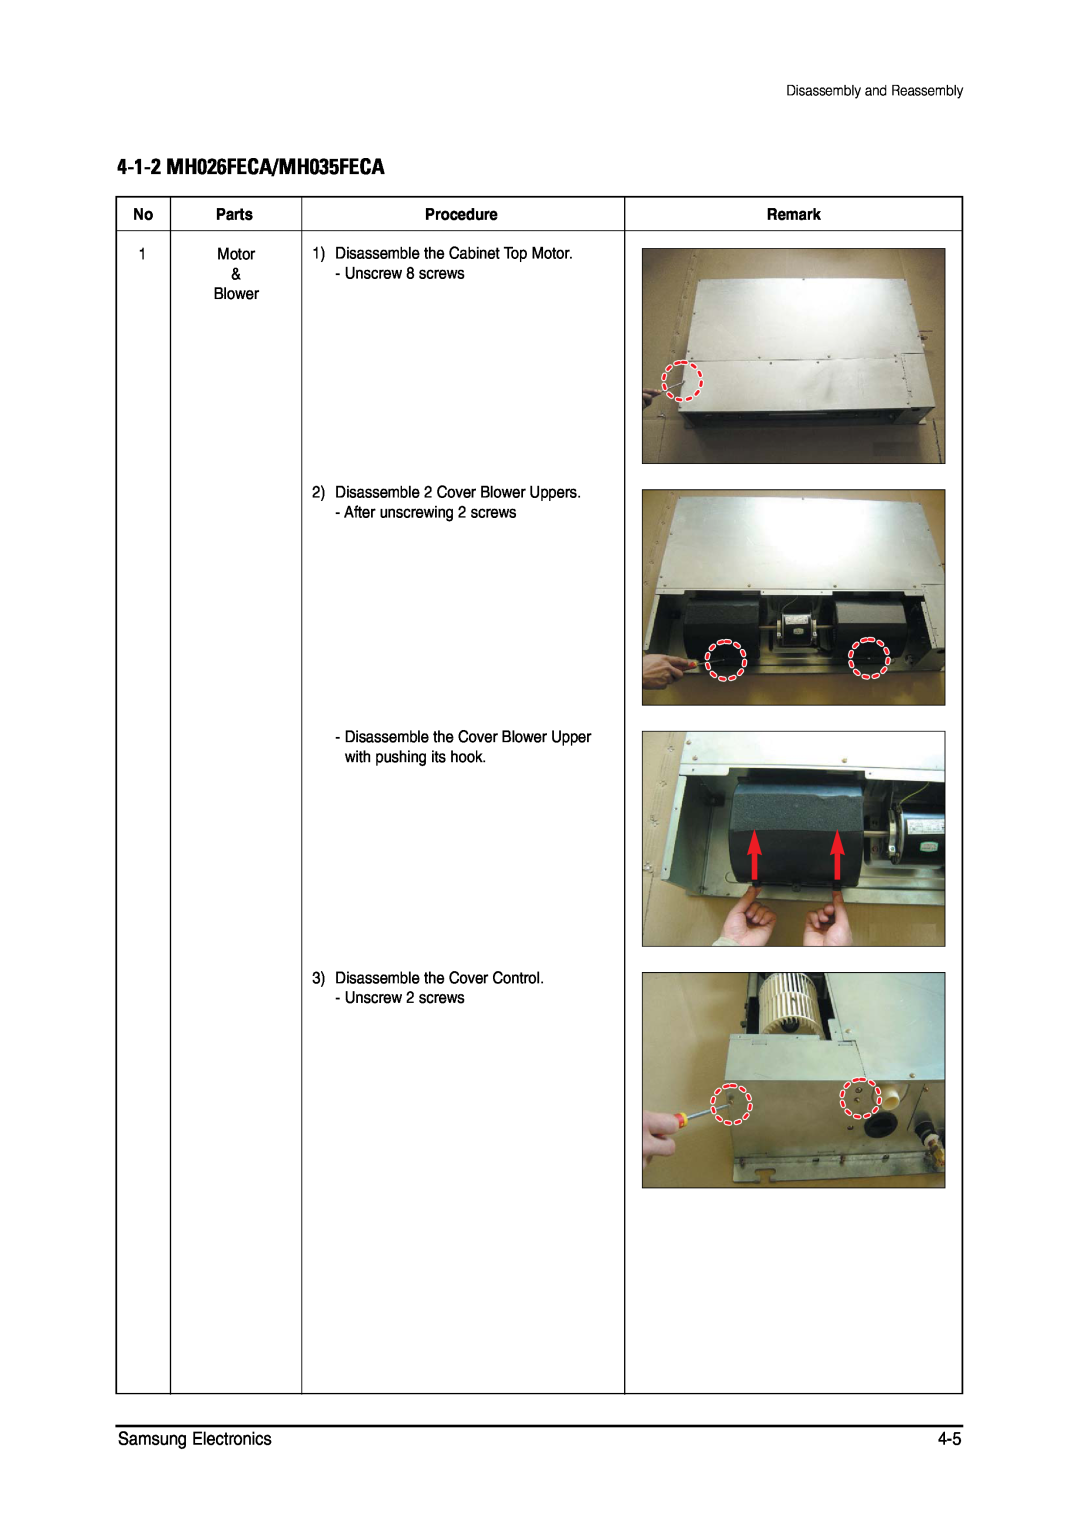 Samsung MH026FNCA service manual 4-1-2MH026FECA/MH035FECA, Procedure, Remark, Parts, Blower 